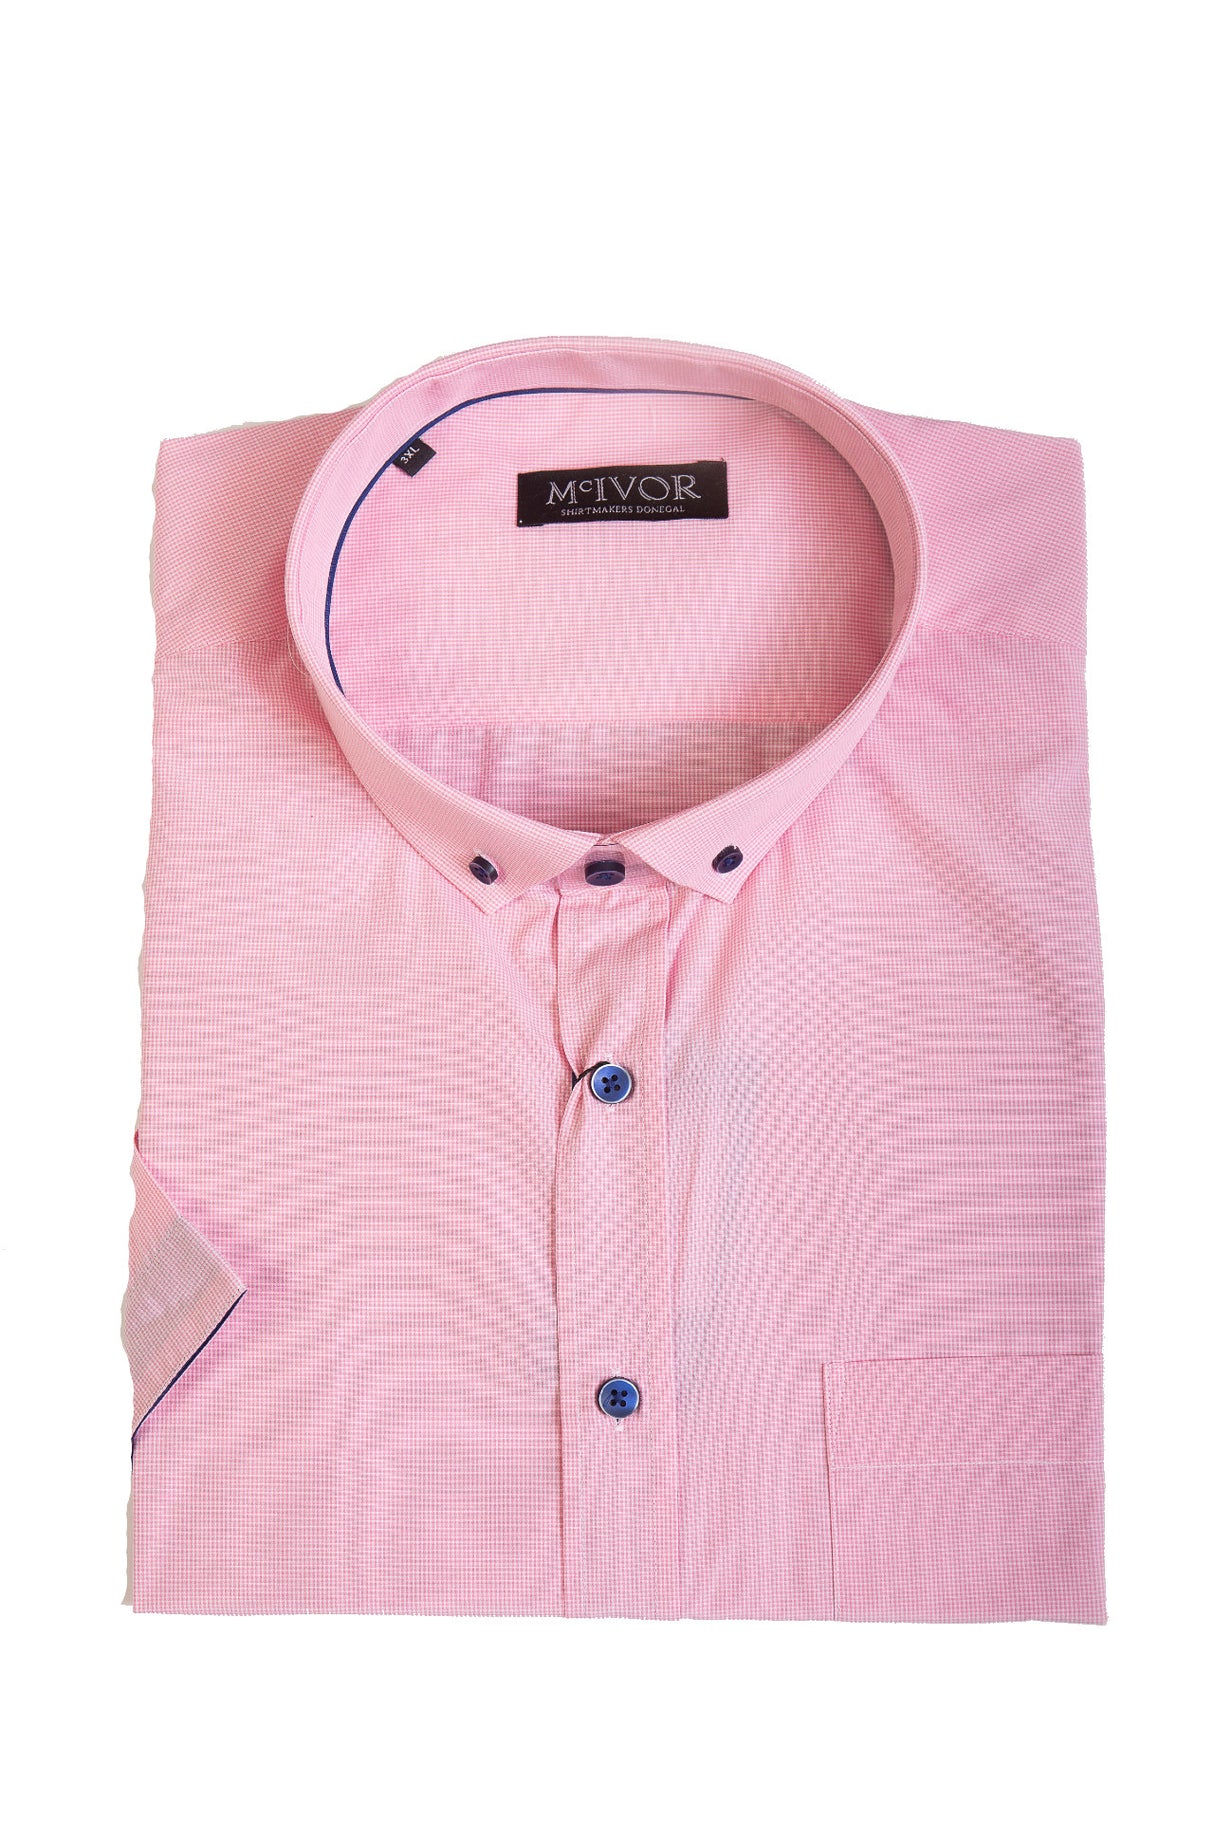 Mc Ivor Niall Pink Mini Check Shirt Pink